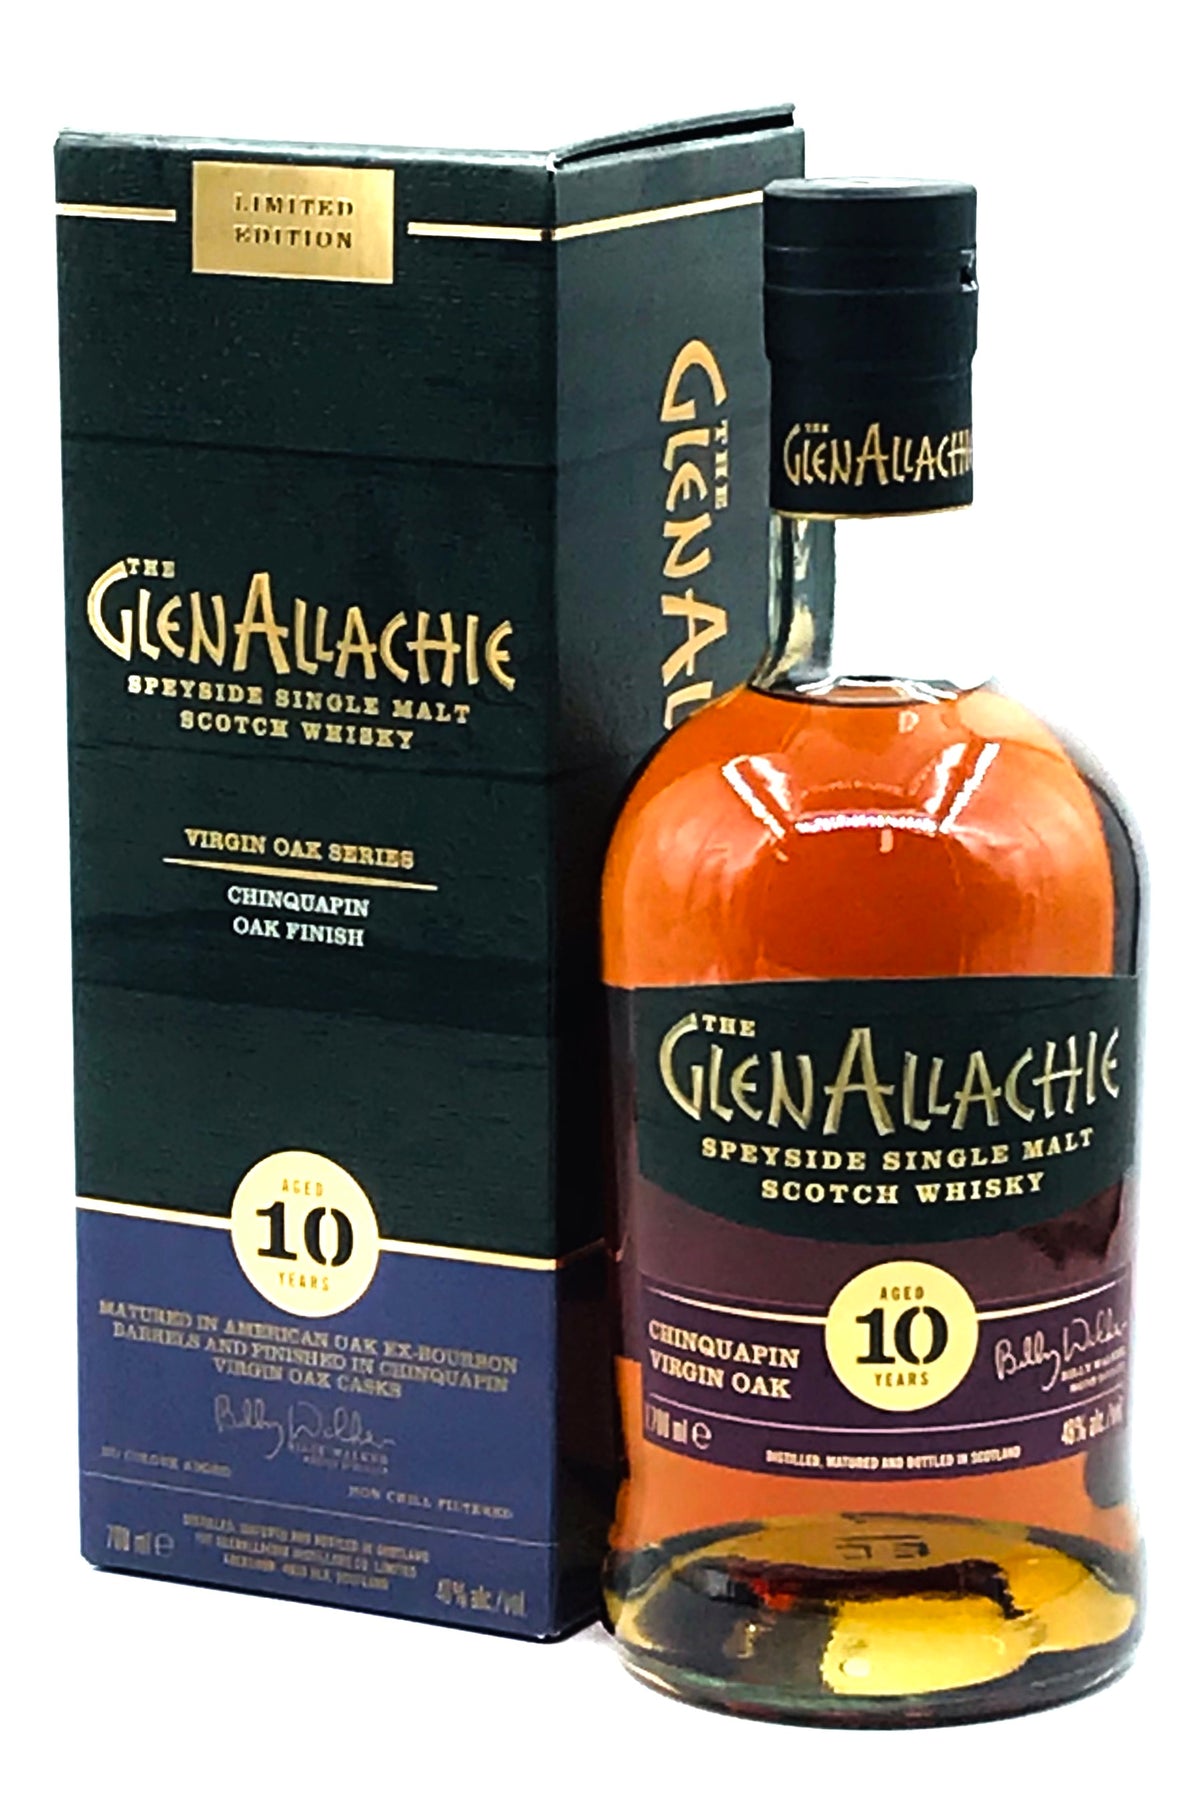 GlenAllachie 10 Year Old Virgin Oak Chinquapin Single Malt Scotch Whisky